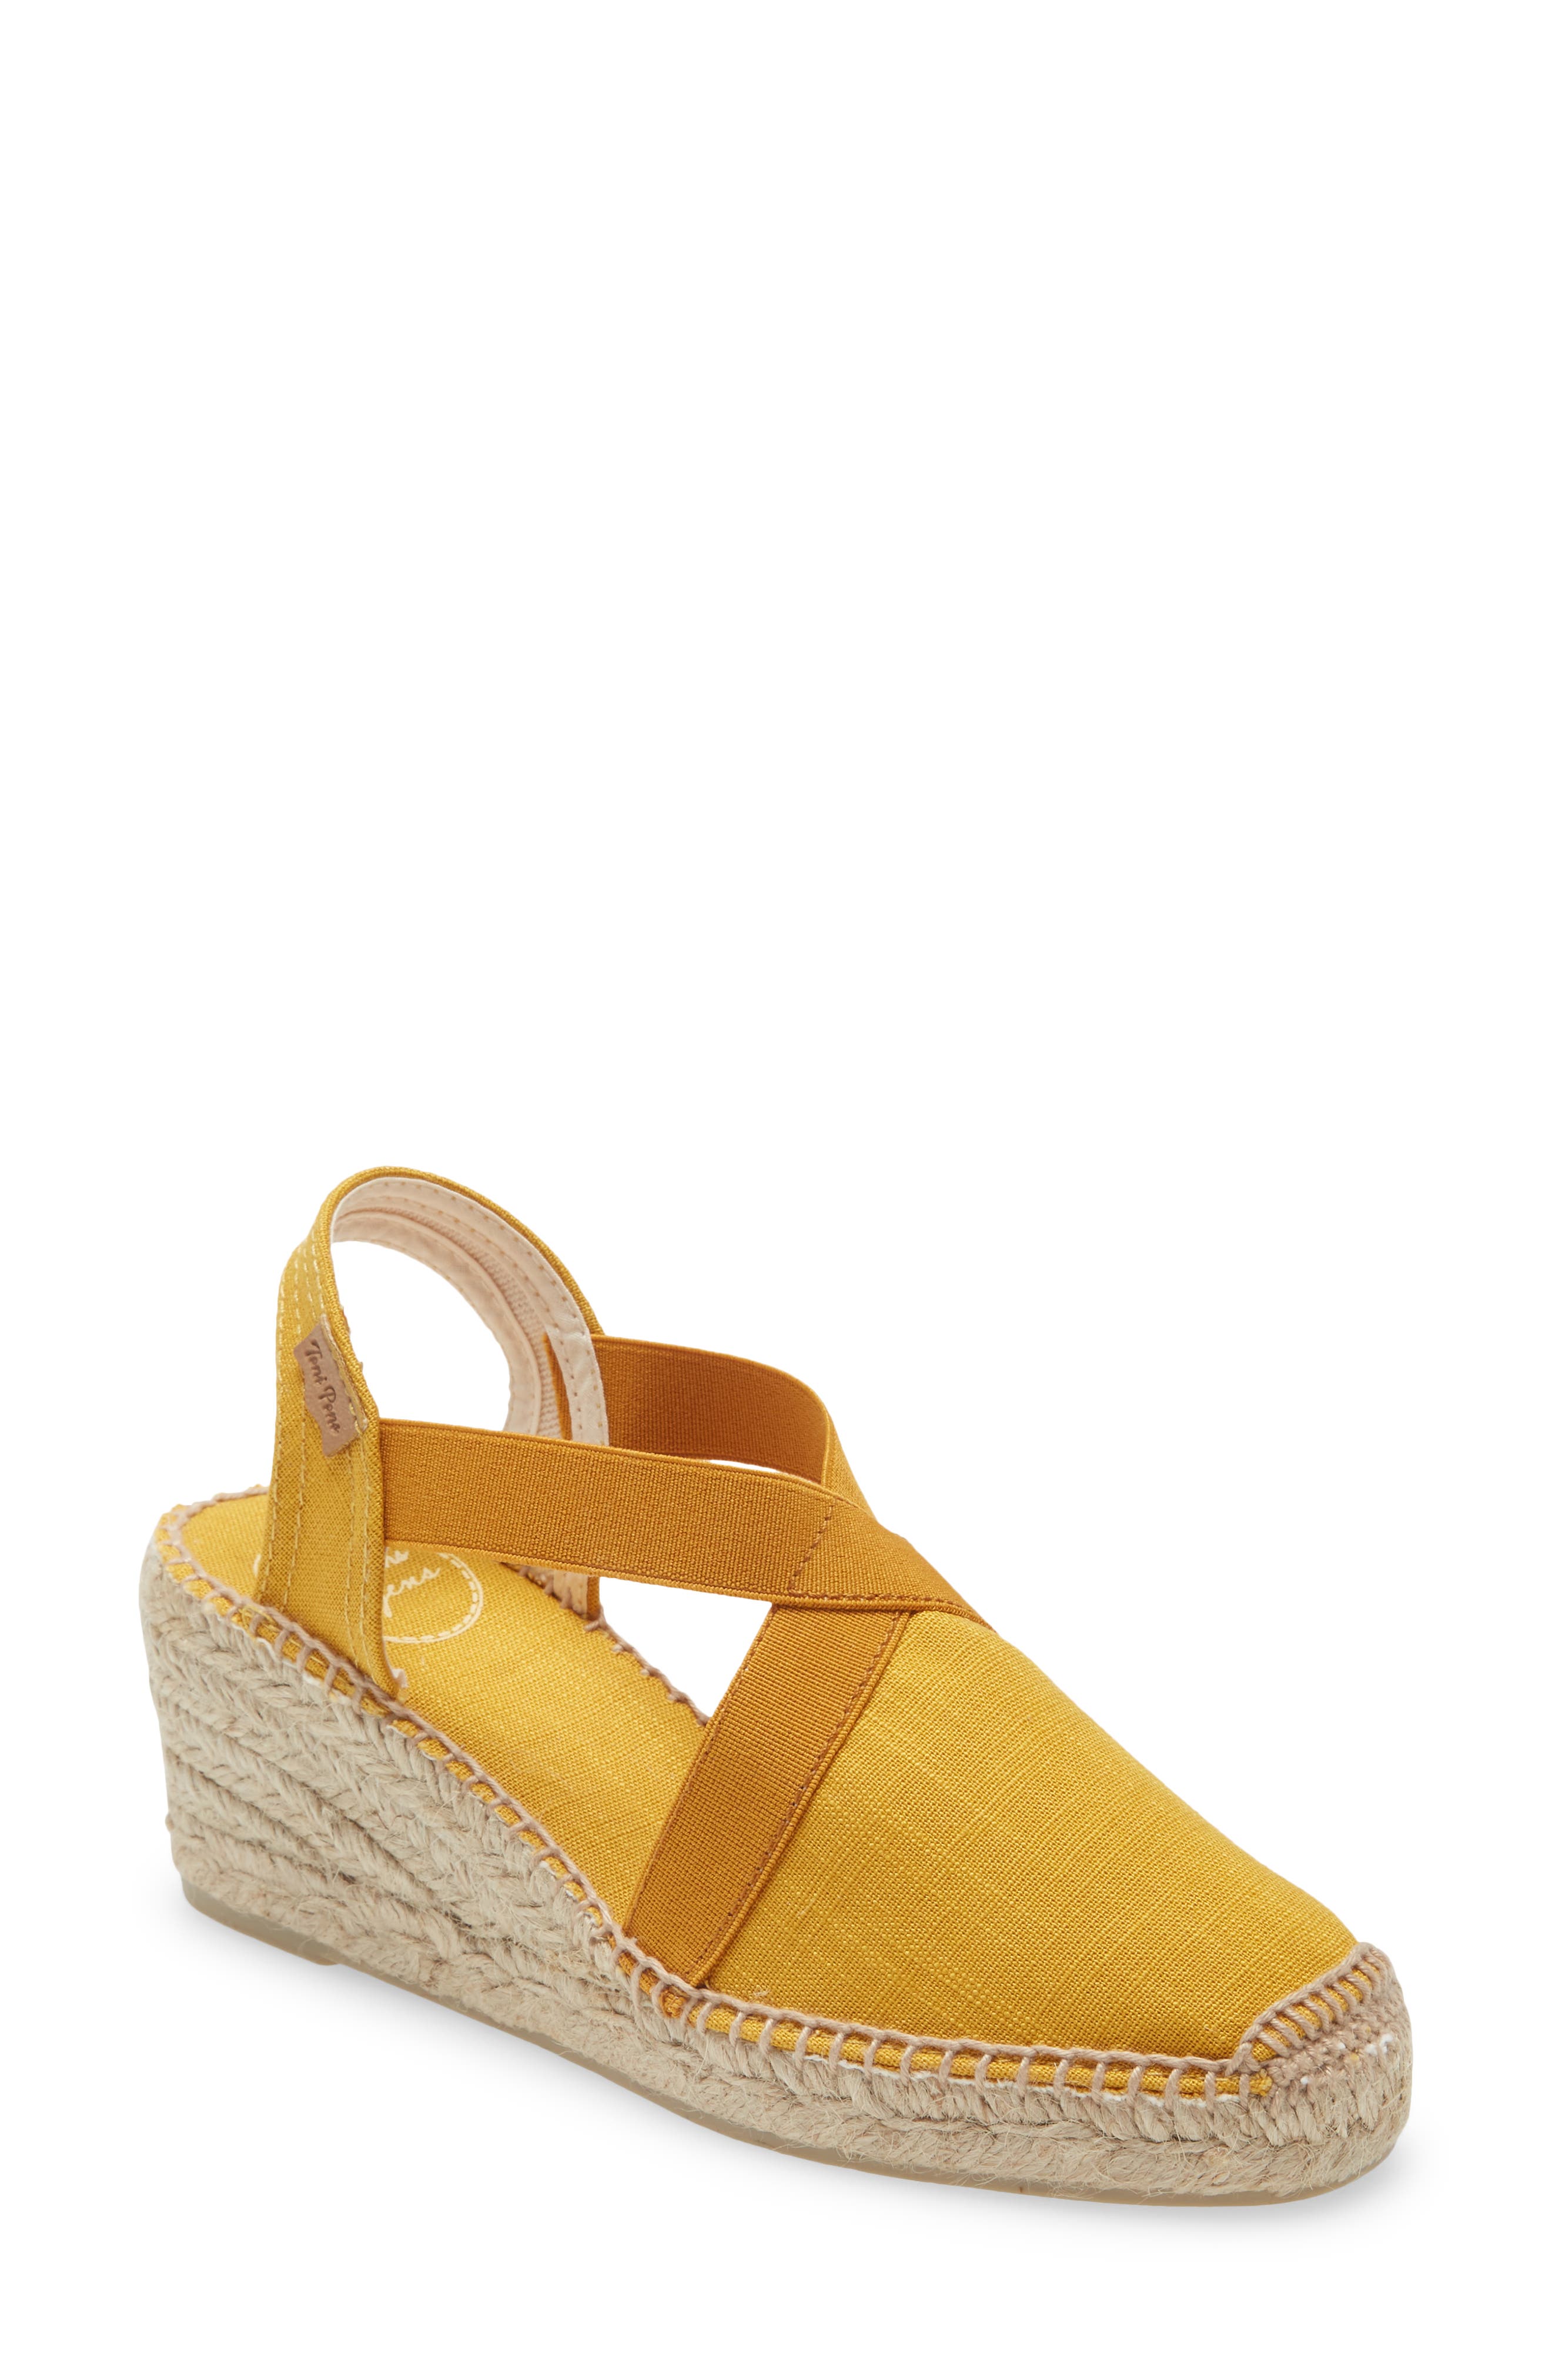 yellow espadrille sandals